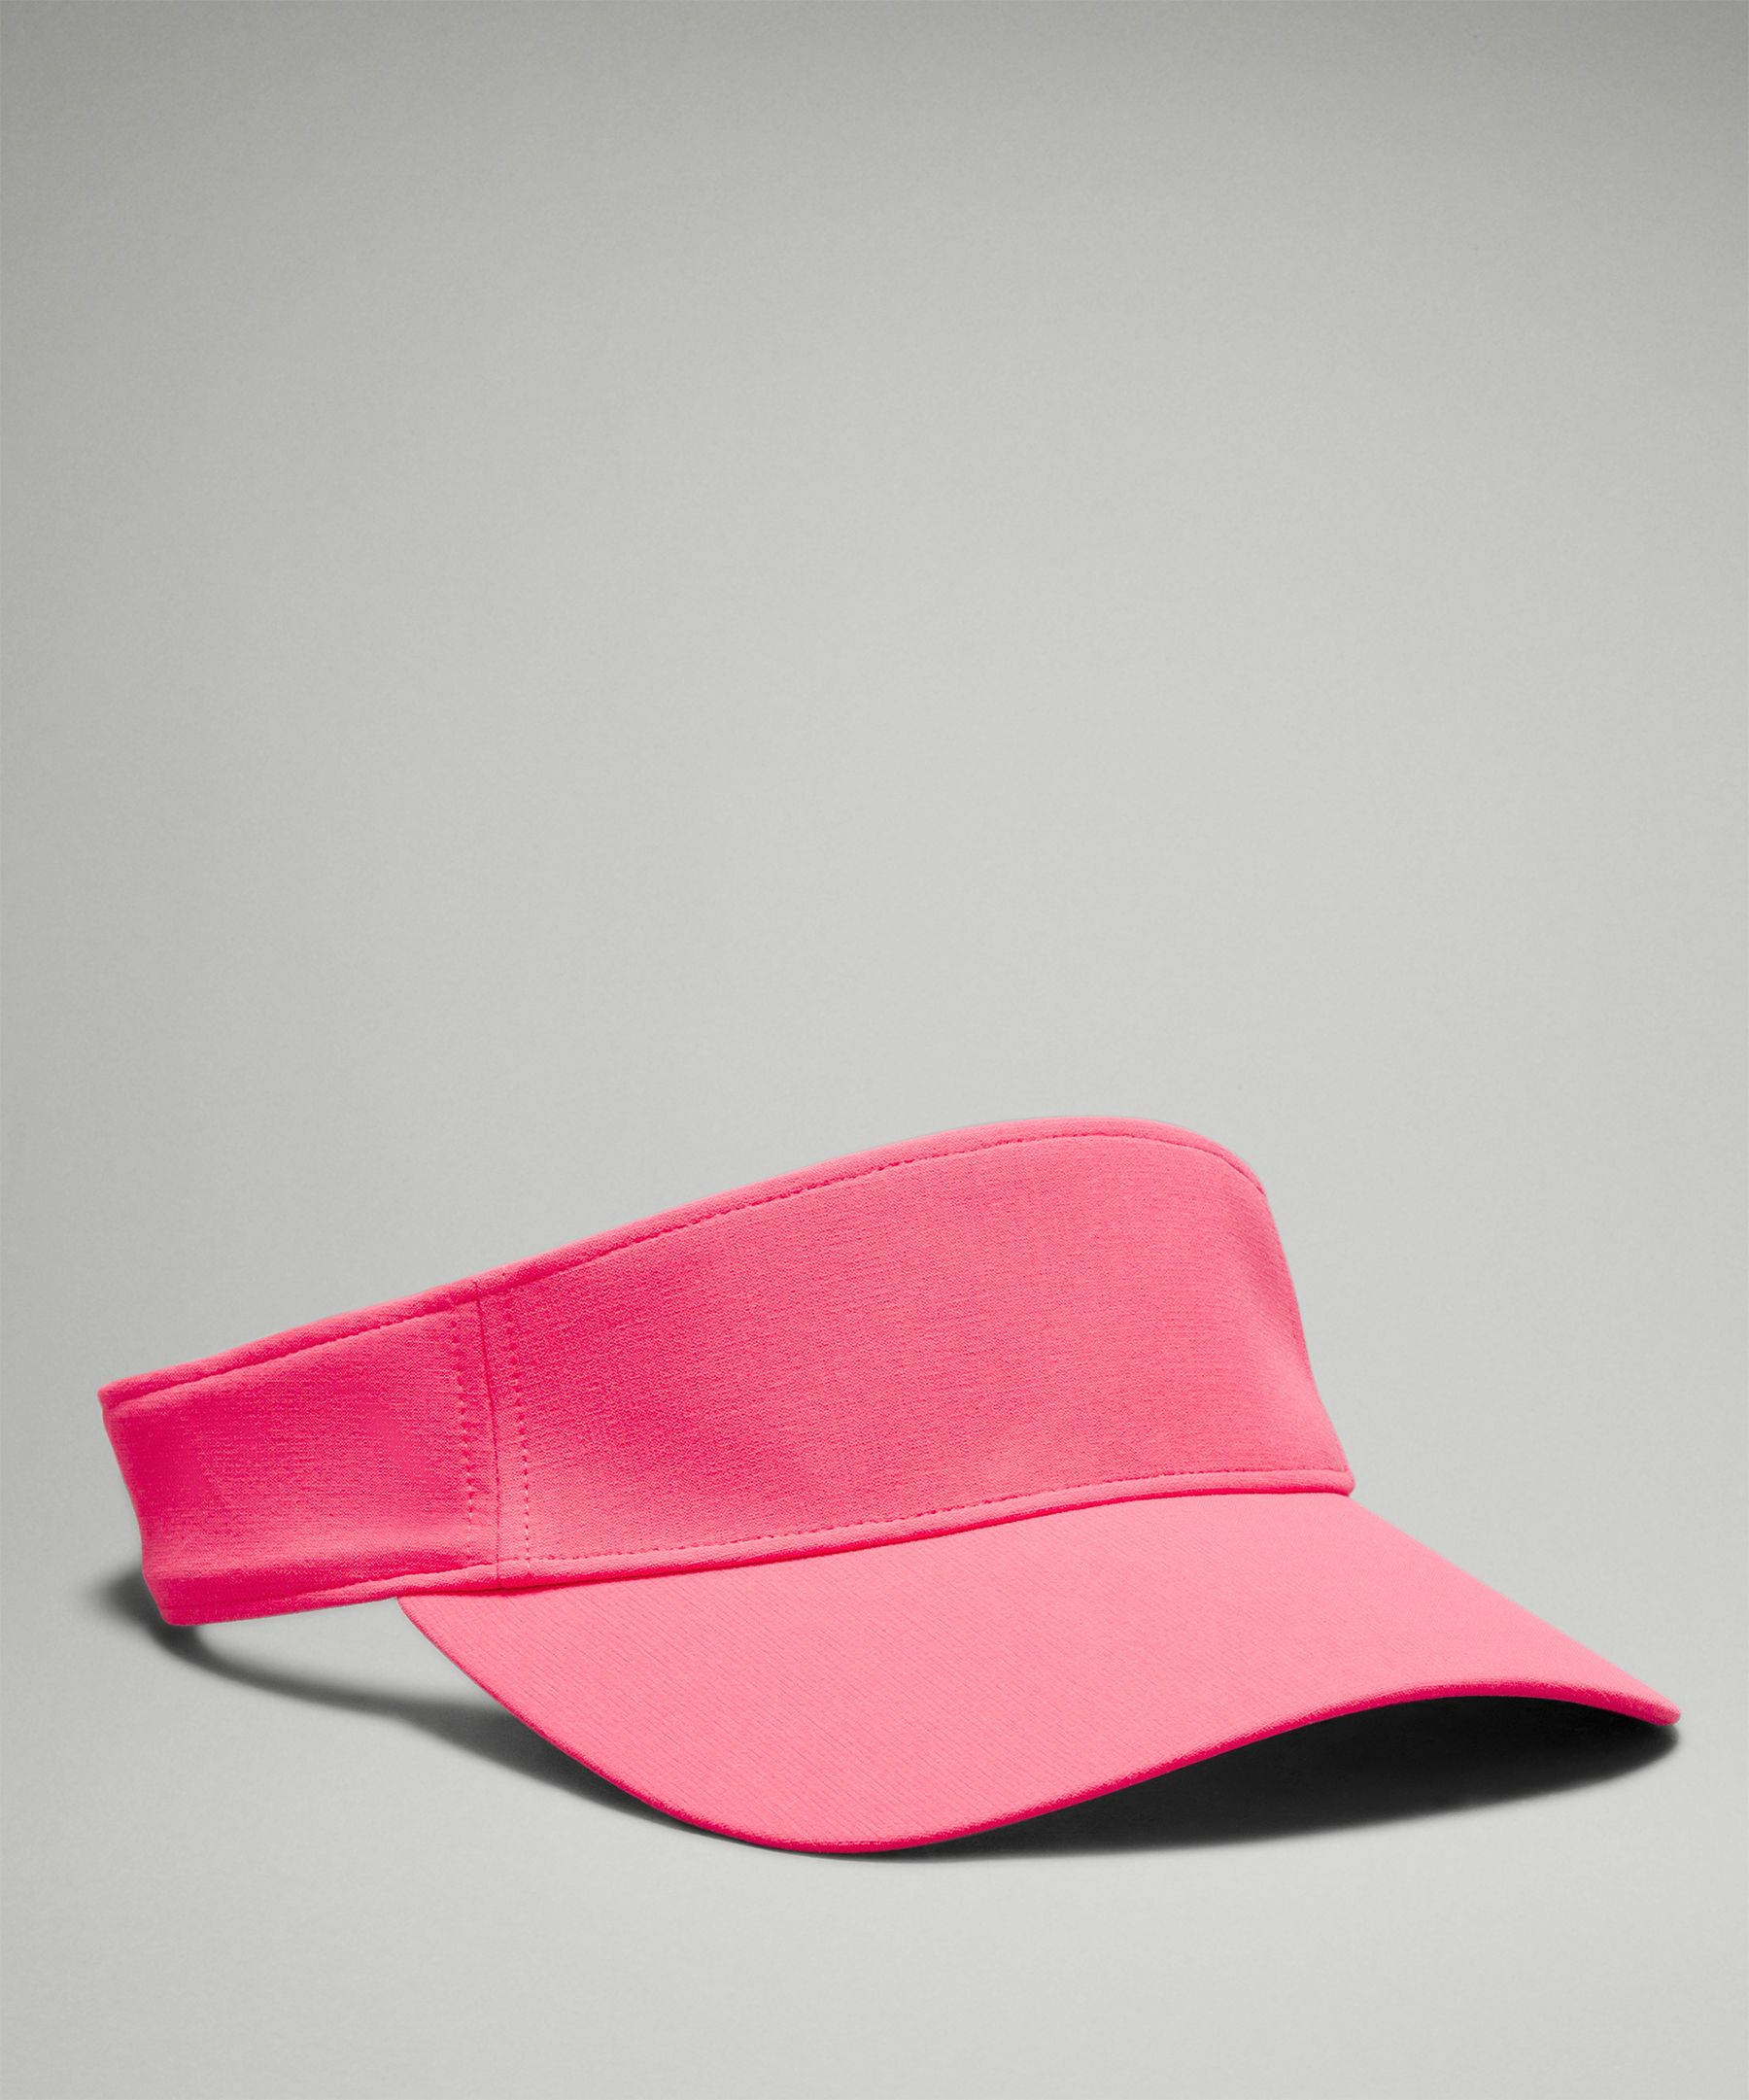 Lululemon athletica Removable Sweatband All-Sport Visor, Unisex Hats